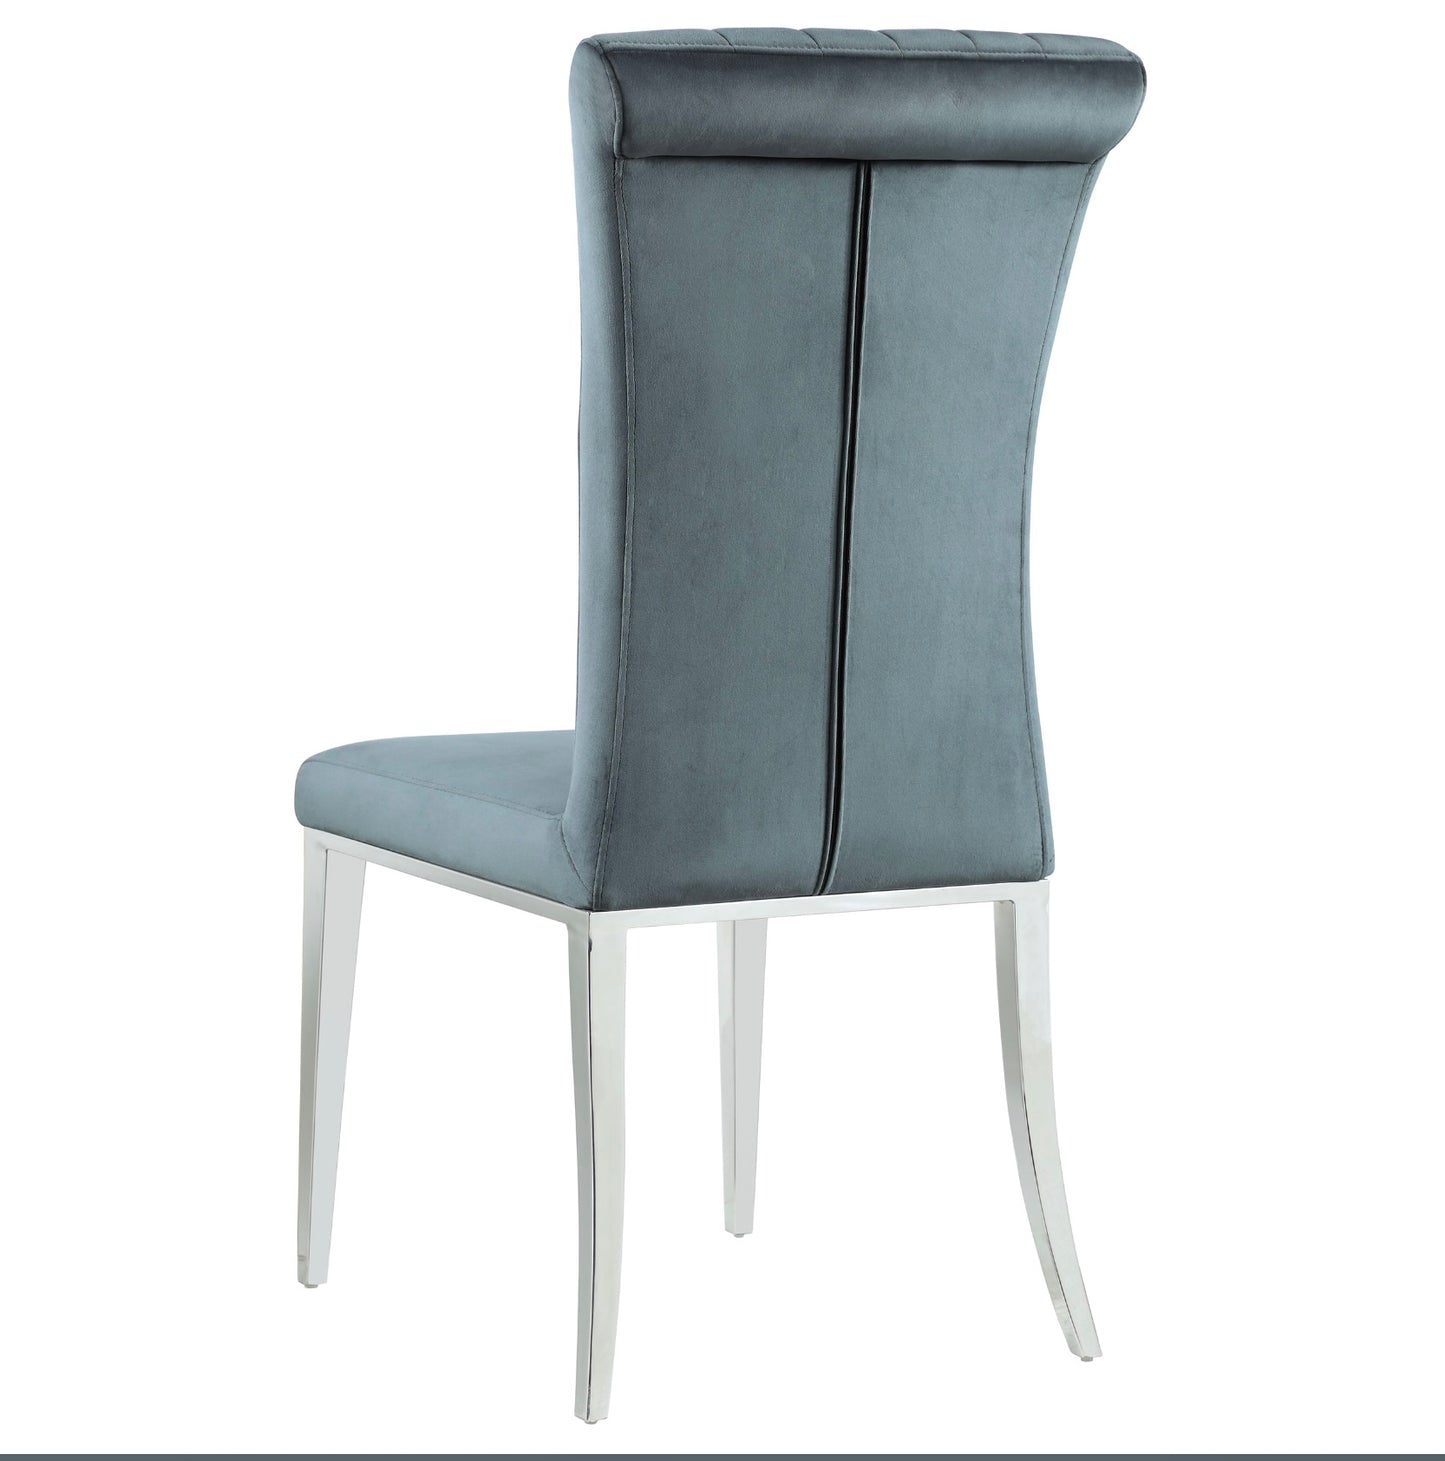 Beaufort 5-Piece Chrome & Glass Dining Set with Dark Grey Velvet Chairs